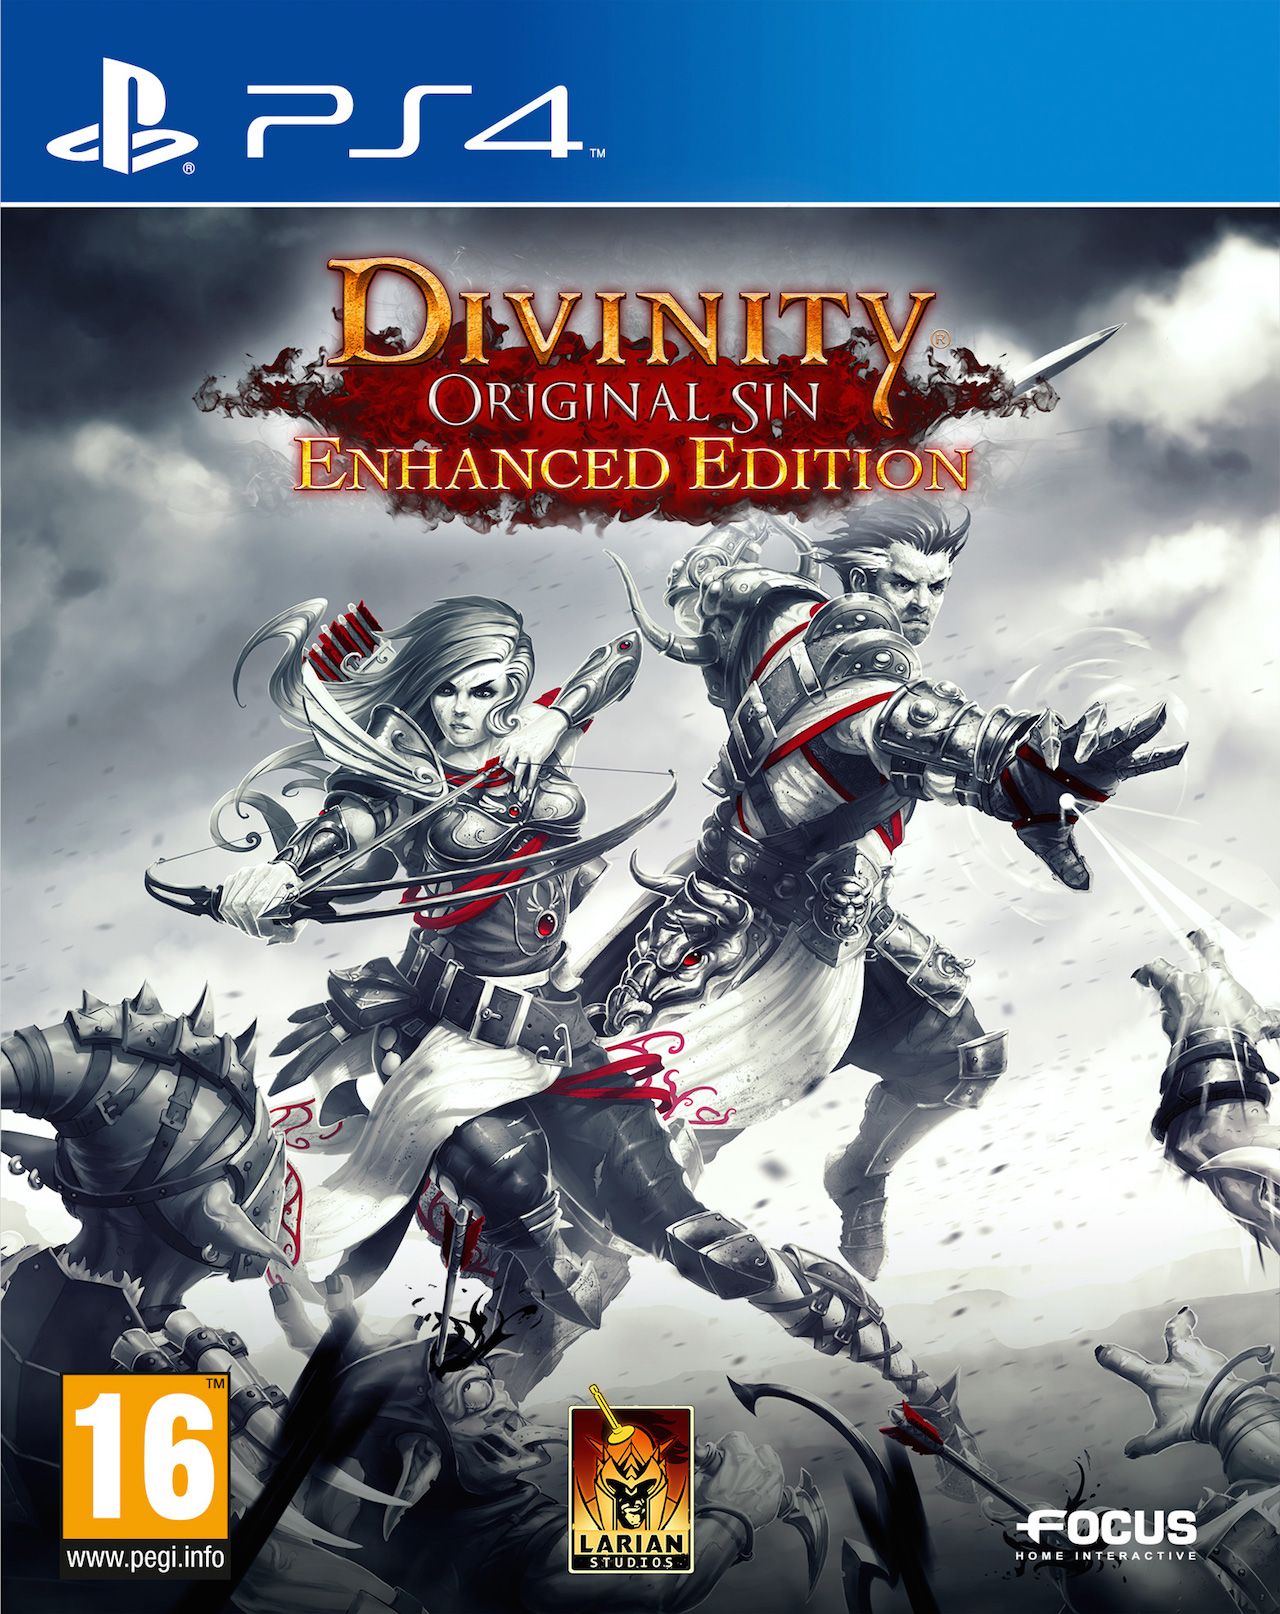 jaquette reduite de Divinity: Original Sin Enhanced Edition sur Playstation 4